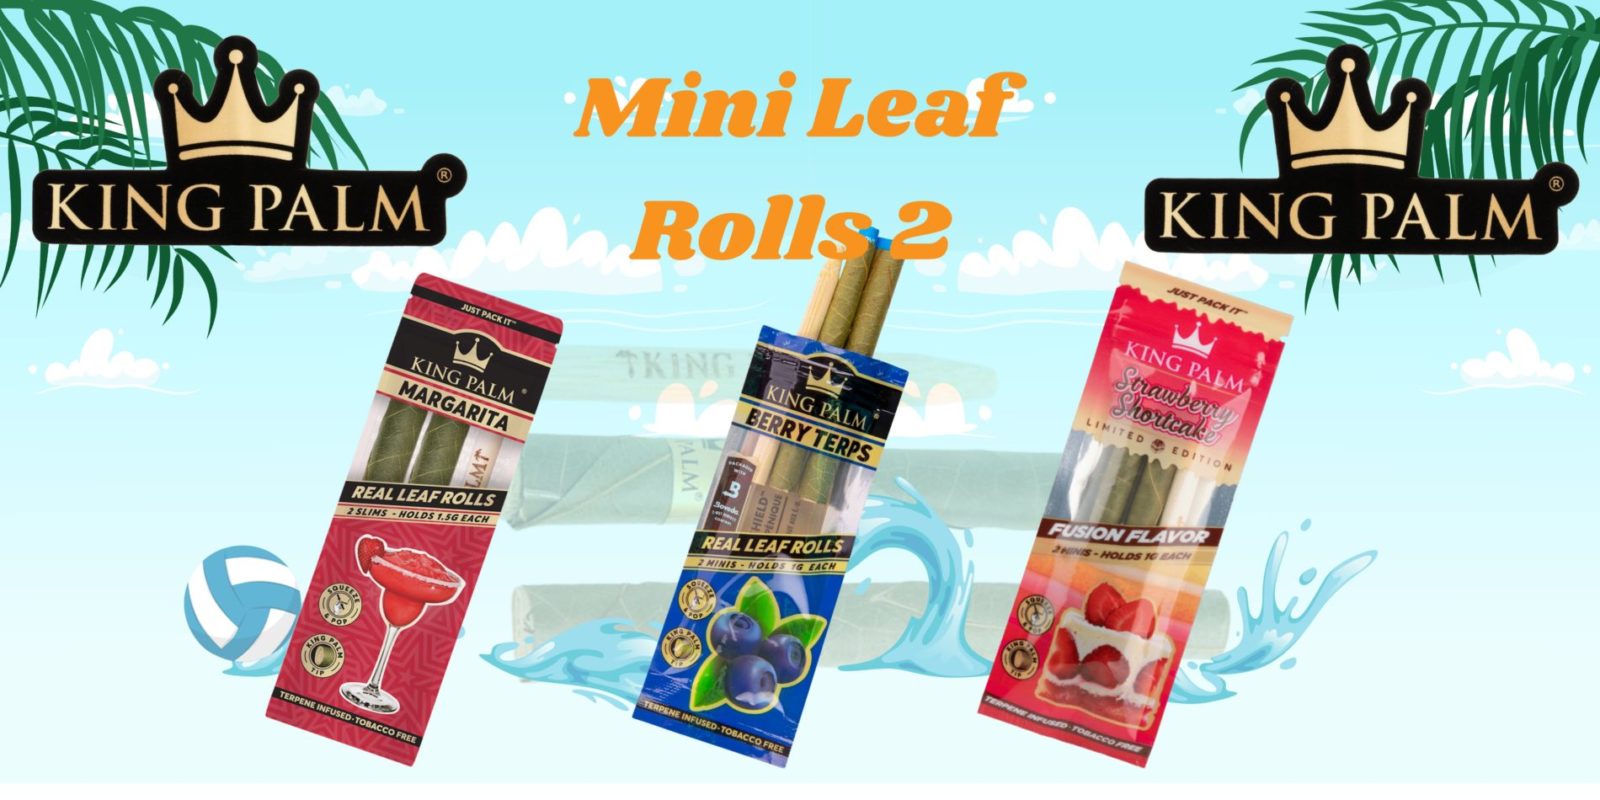 King Palm Mini Leaf Rolls 2 – Pumpkin Cream 420 SUPPLIES - XMANIA Ireland 14